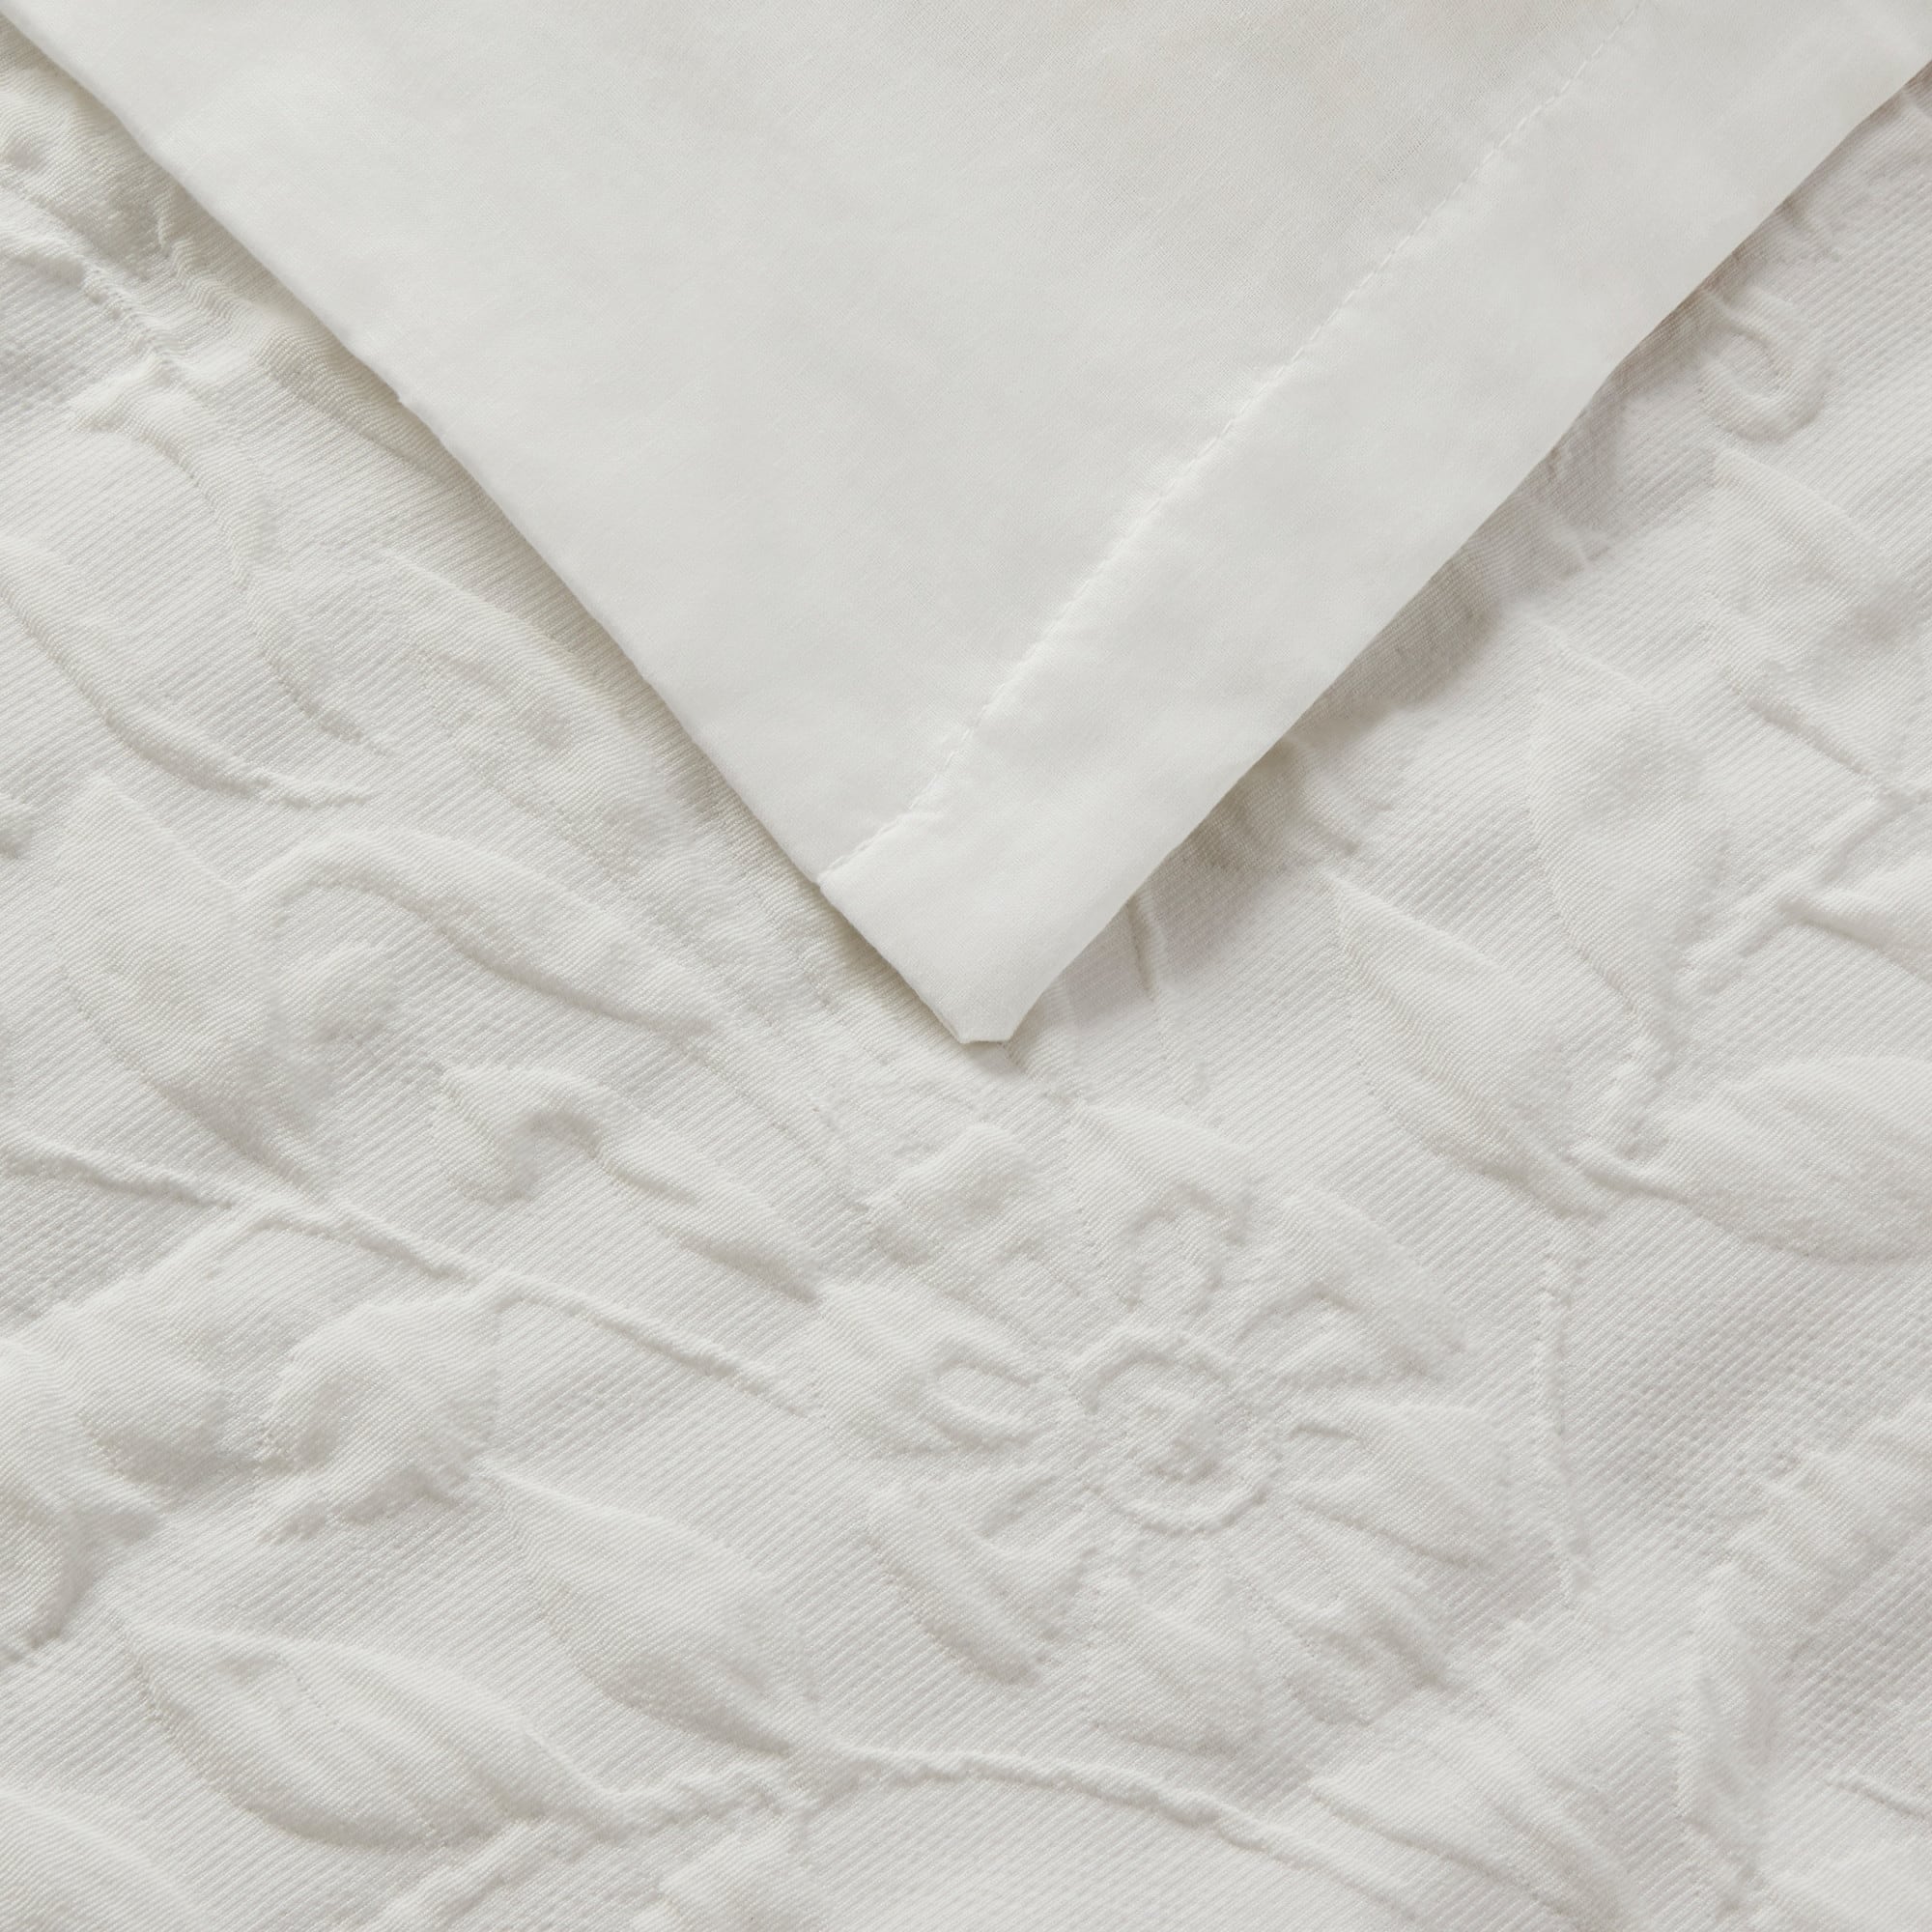 Laura Ashley Rowland Matelasse White Cotton Duvet Cover Set - Bed Bath ...